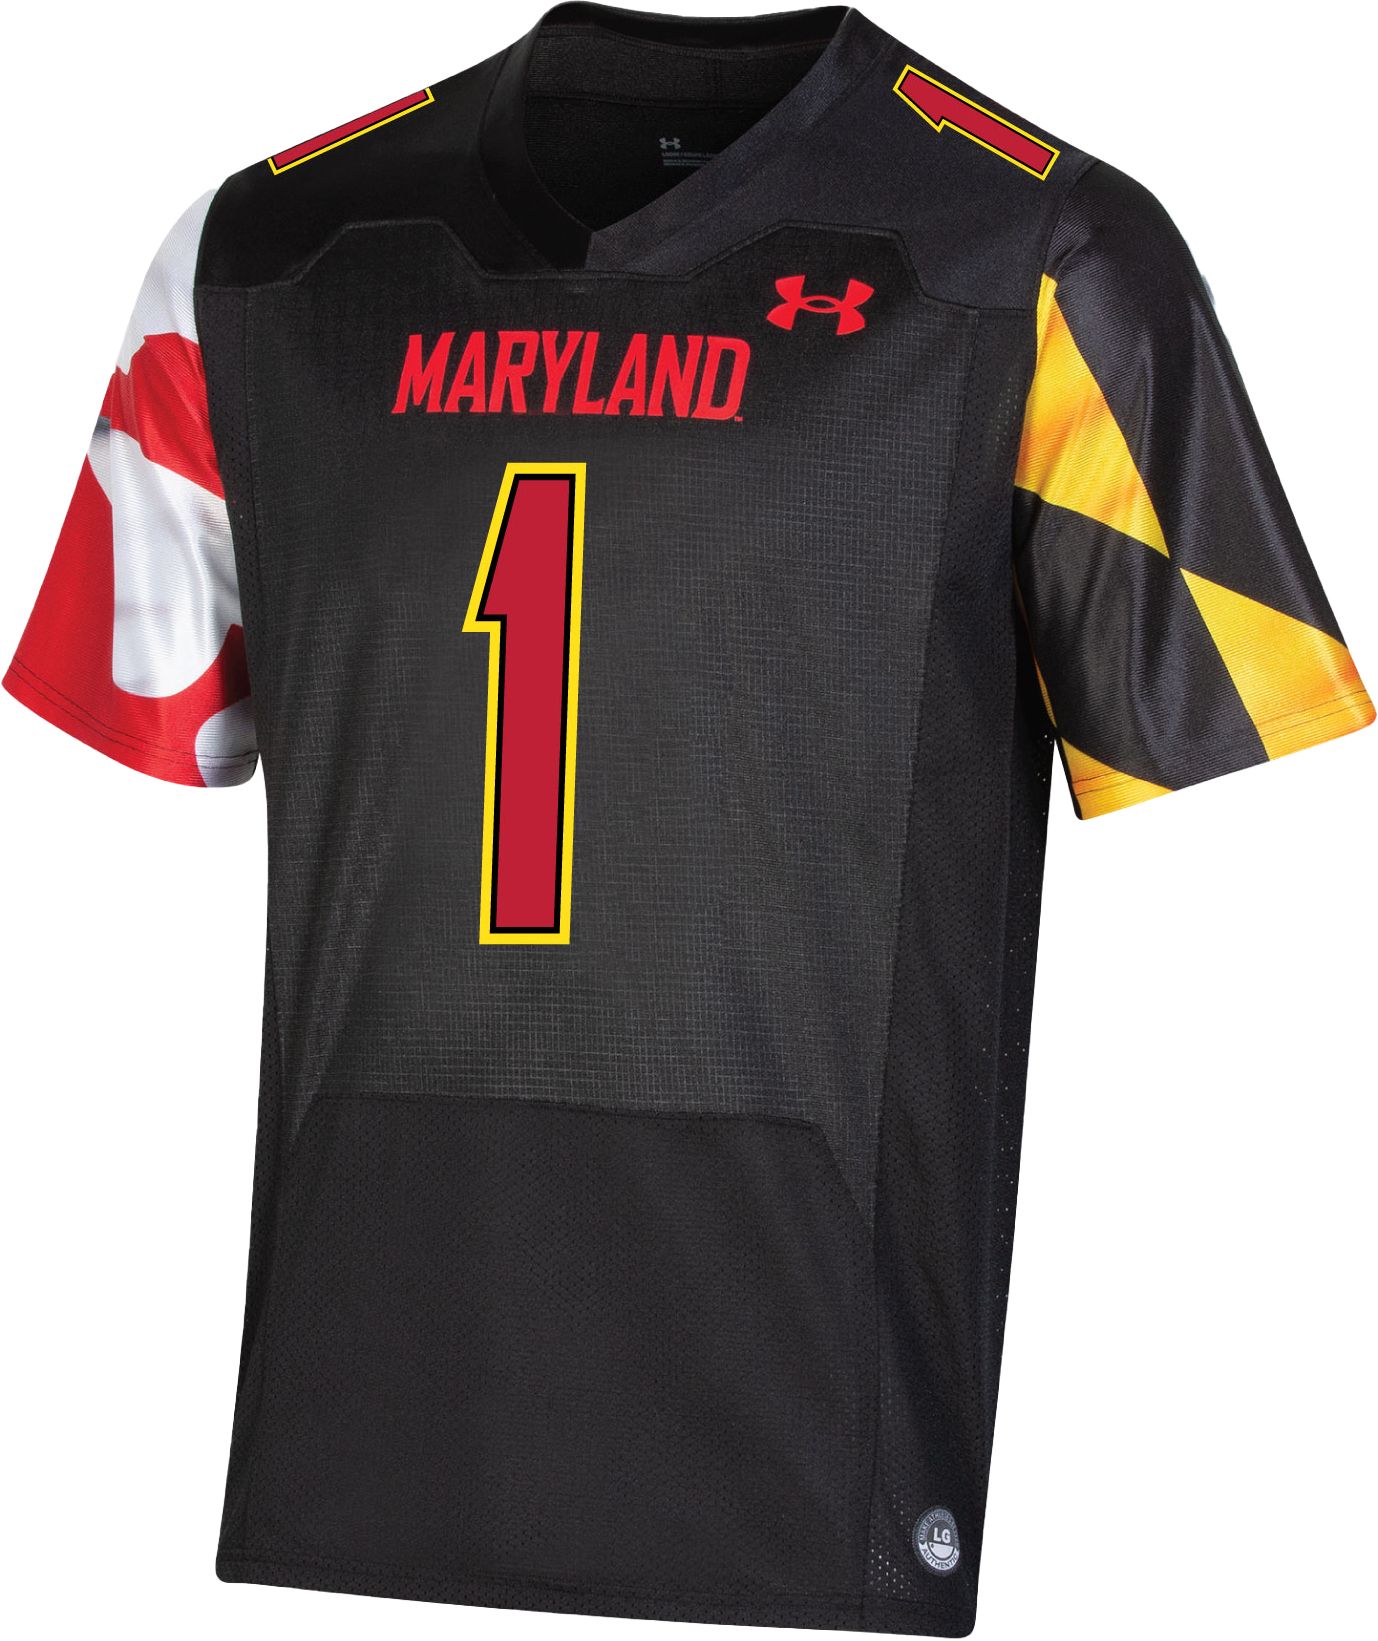 Maryland Terrapins soccer gear